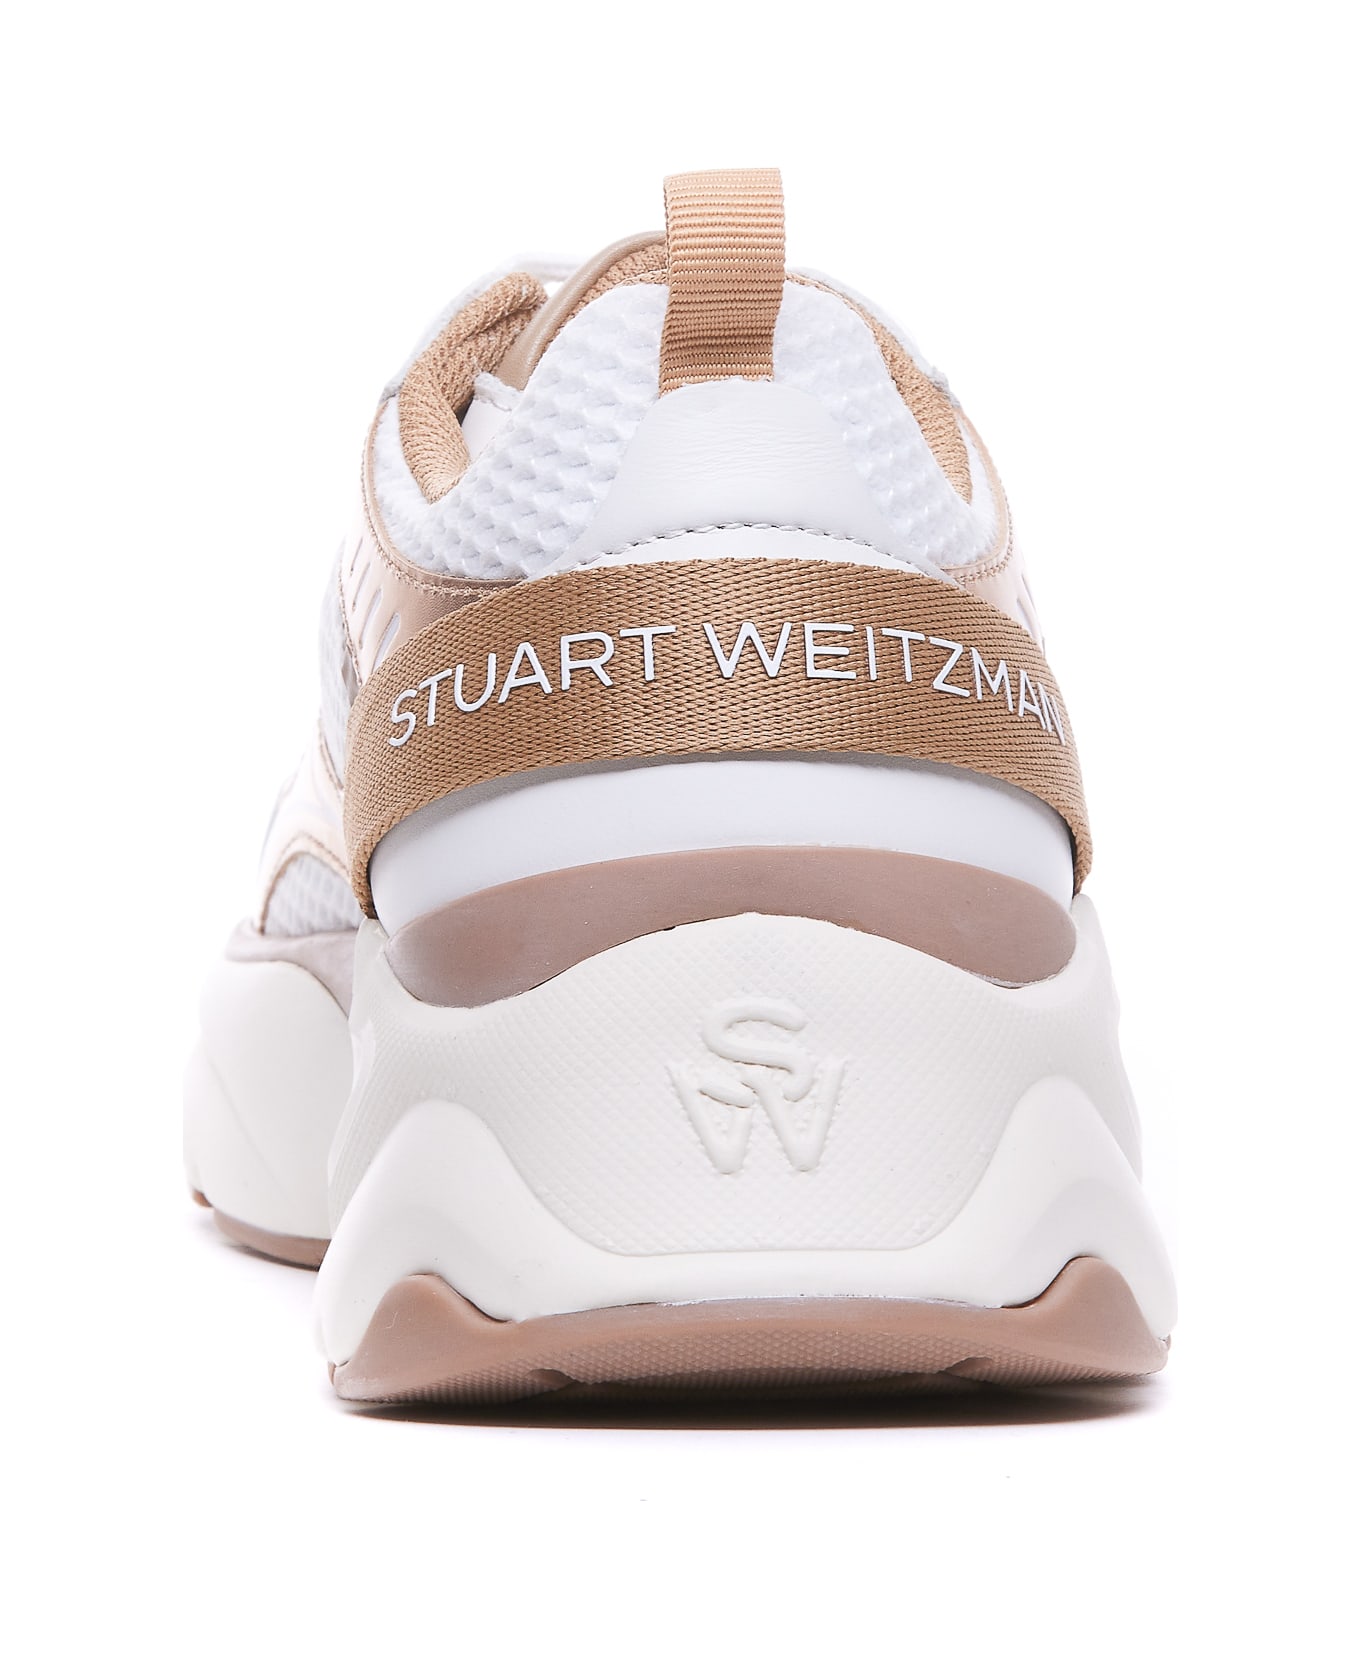 Stuart Weitzman Trainer Sneakers - White